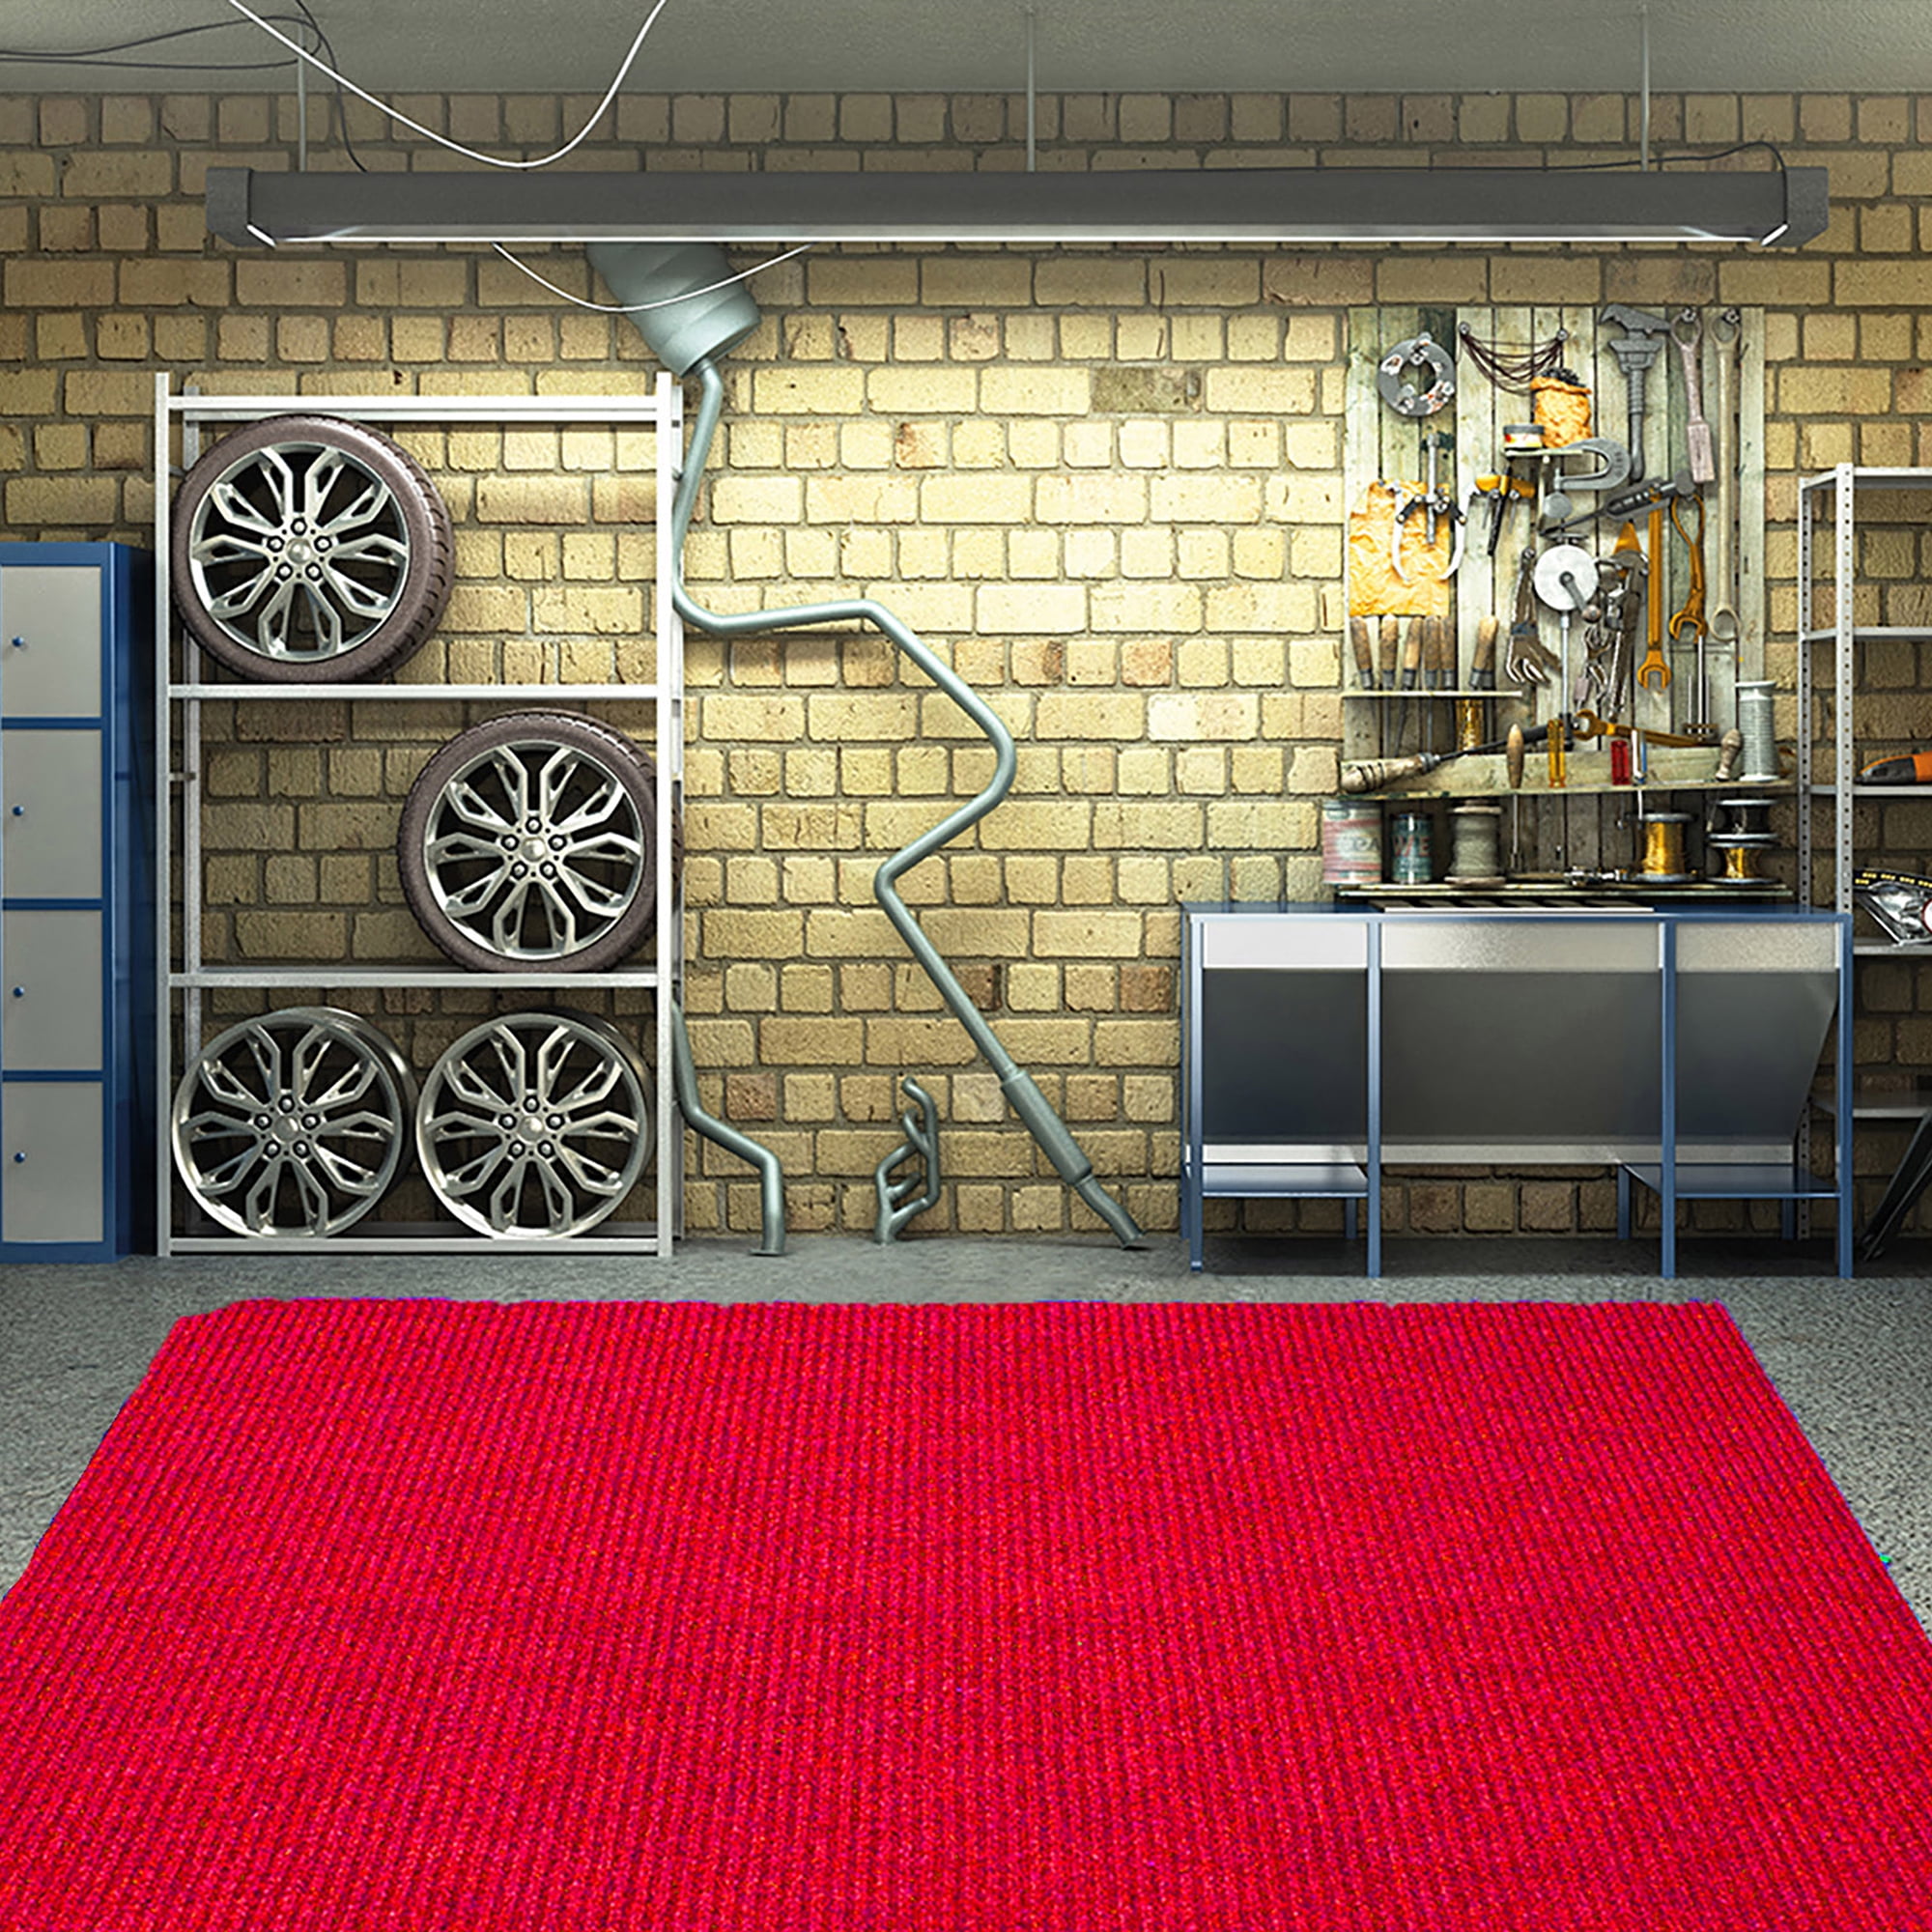 Ottomanson Scrabe Rib Waterproof Non-Slip Rubber Back Runner Rug, 2 ft. W x 8 ft. L, Red, Polypropylene Garage Flooring